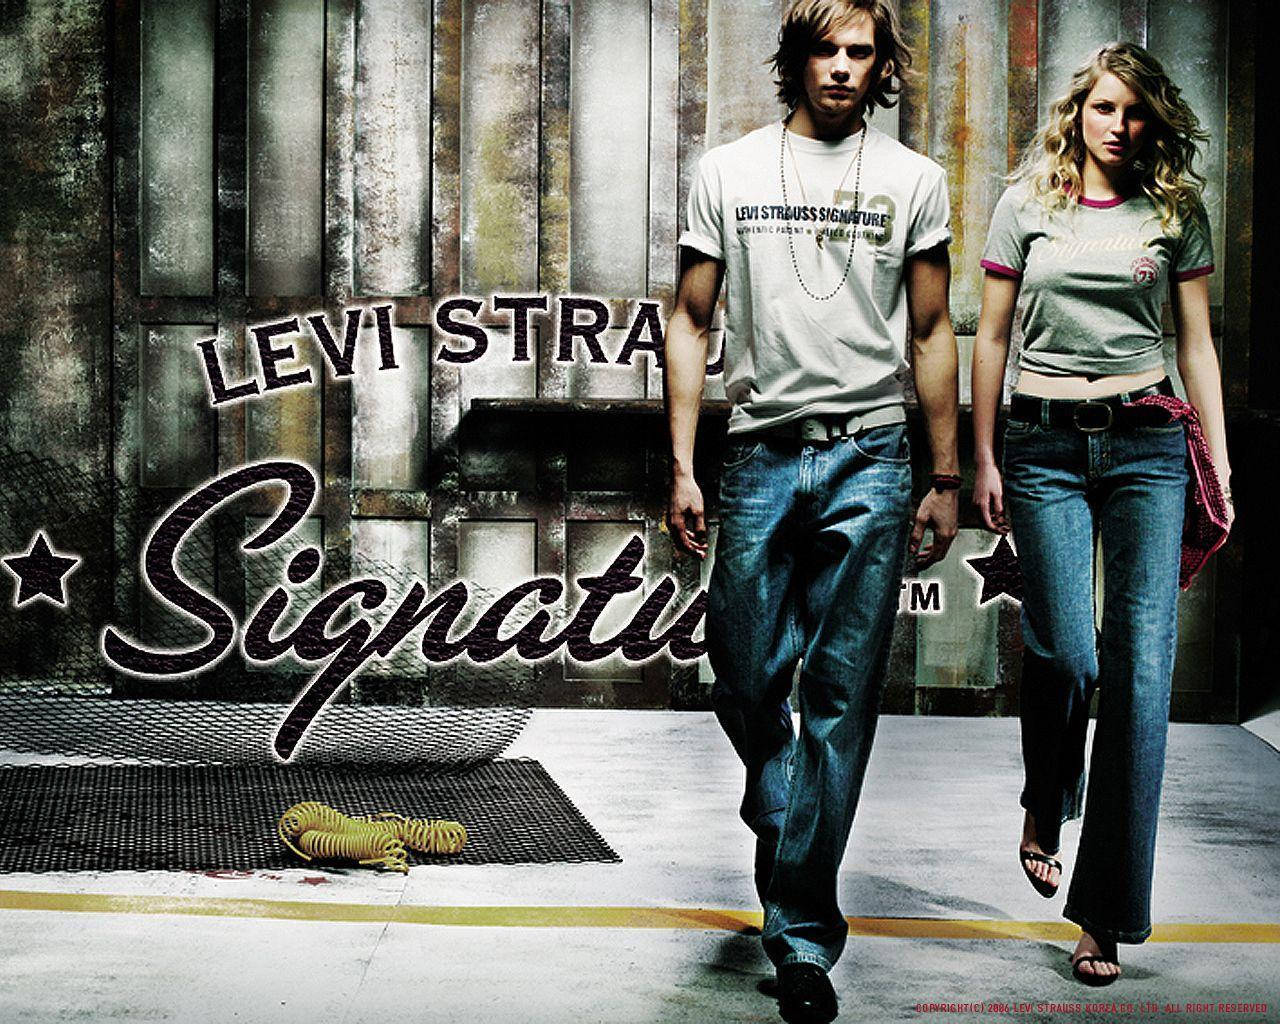 Levi Couple Wearing Denim Jeans Background